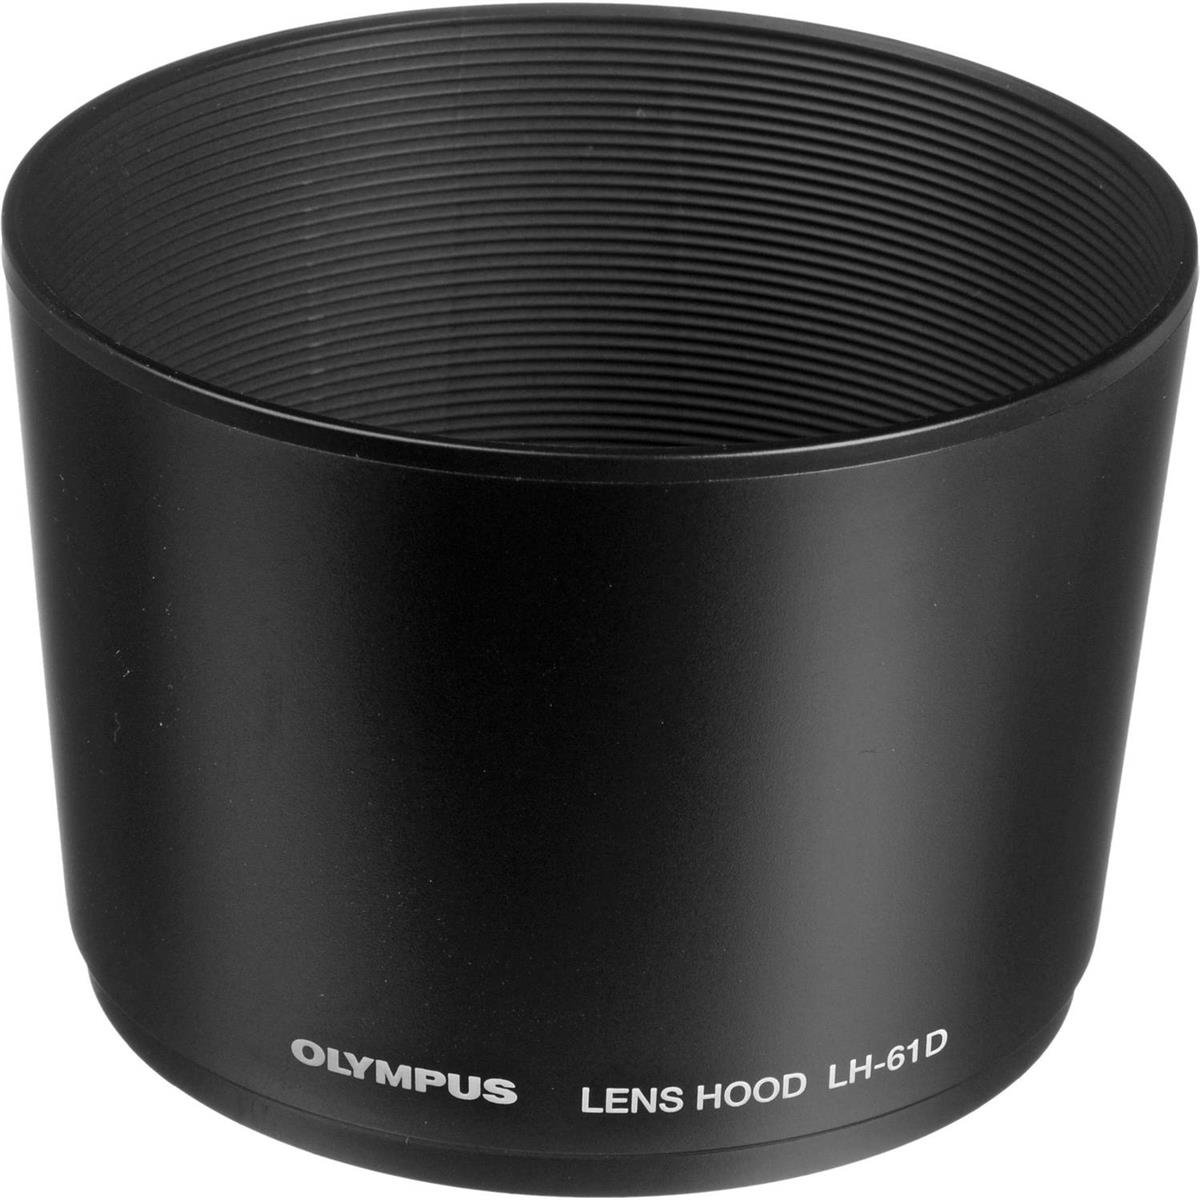 Image of Olympus LH-61D Lens Hood for Zuiko 40-150mm F/4-5.6 Digital Zoom Lens